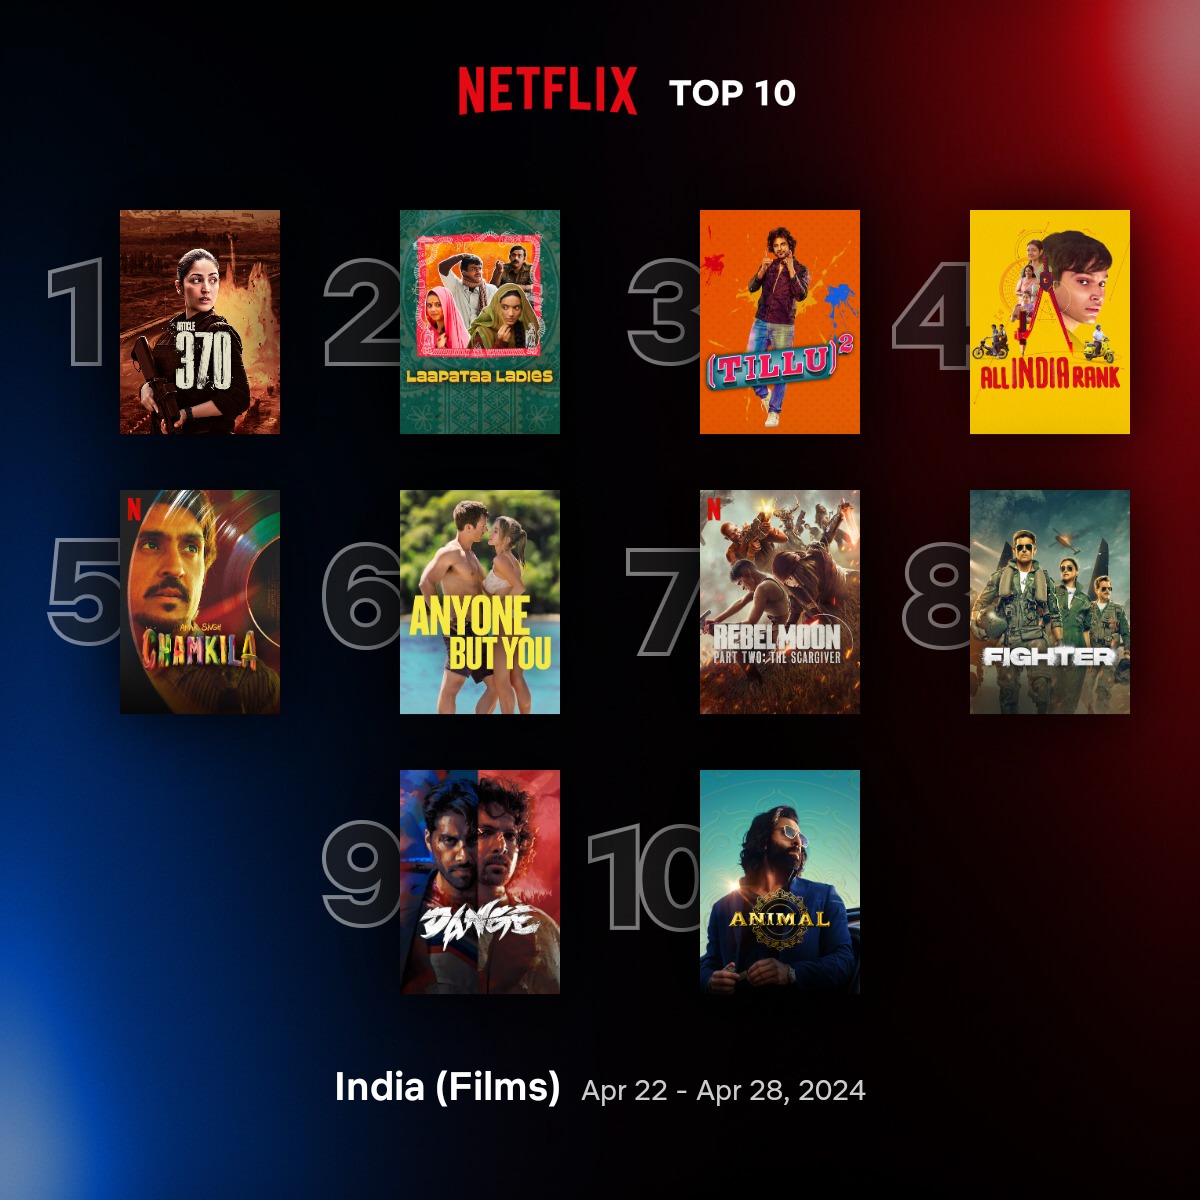 Top 10 films on #Netflix India (22-28 April) 1.#Article370 2.#LaapataaLadies 3.#TilluSquare 5.#AmarSinghChamkila 8.#Fighter 10.#Animal